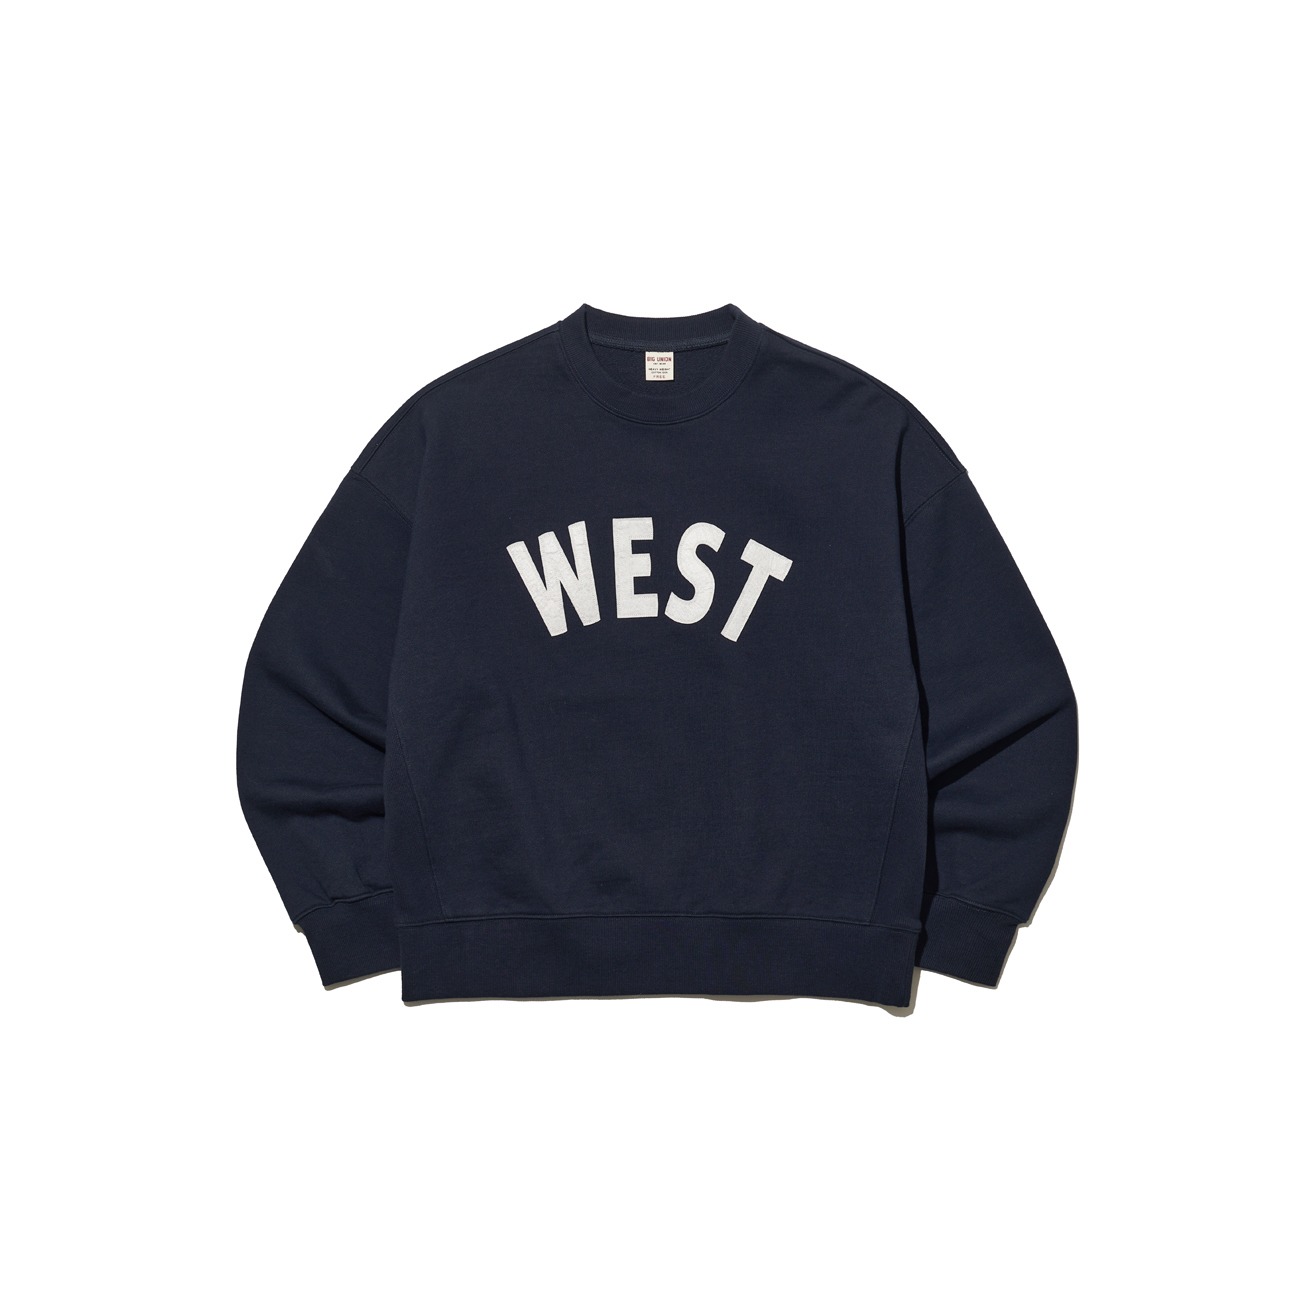 16oz West Sweatshirts